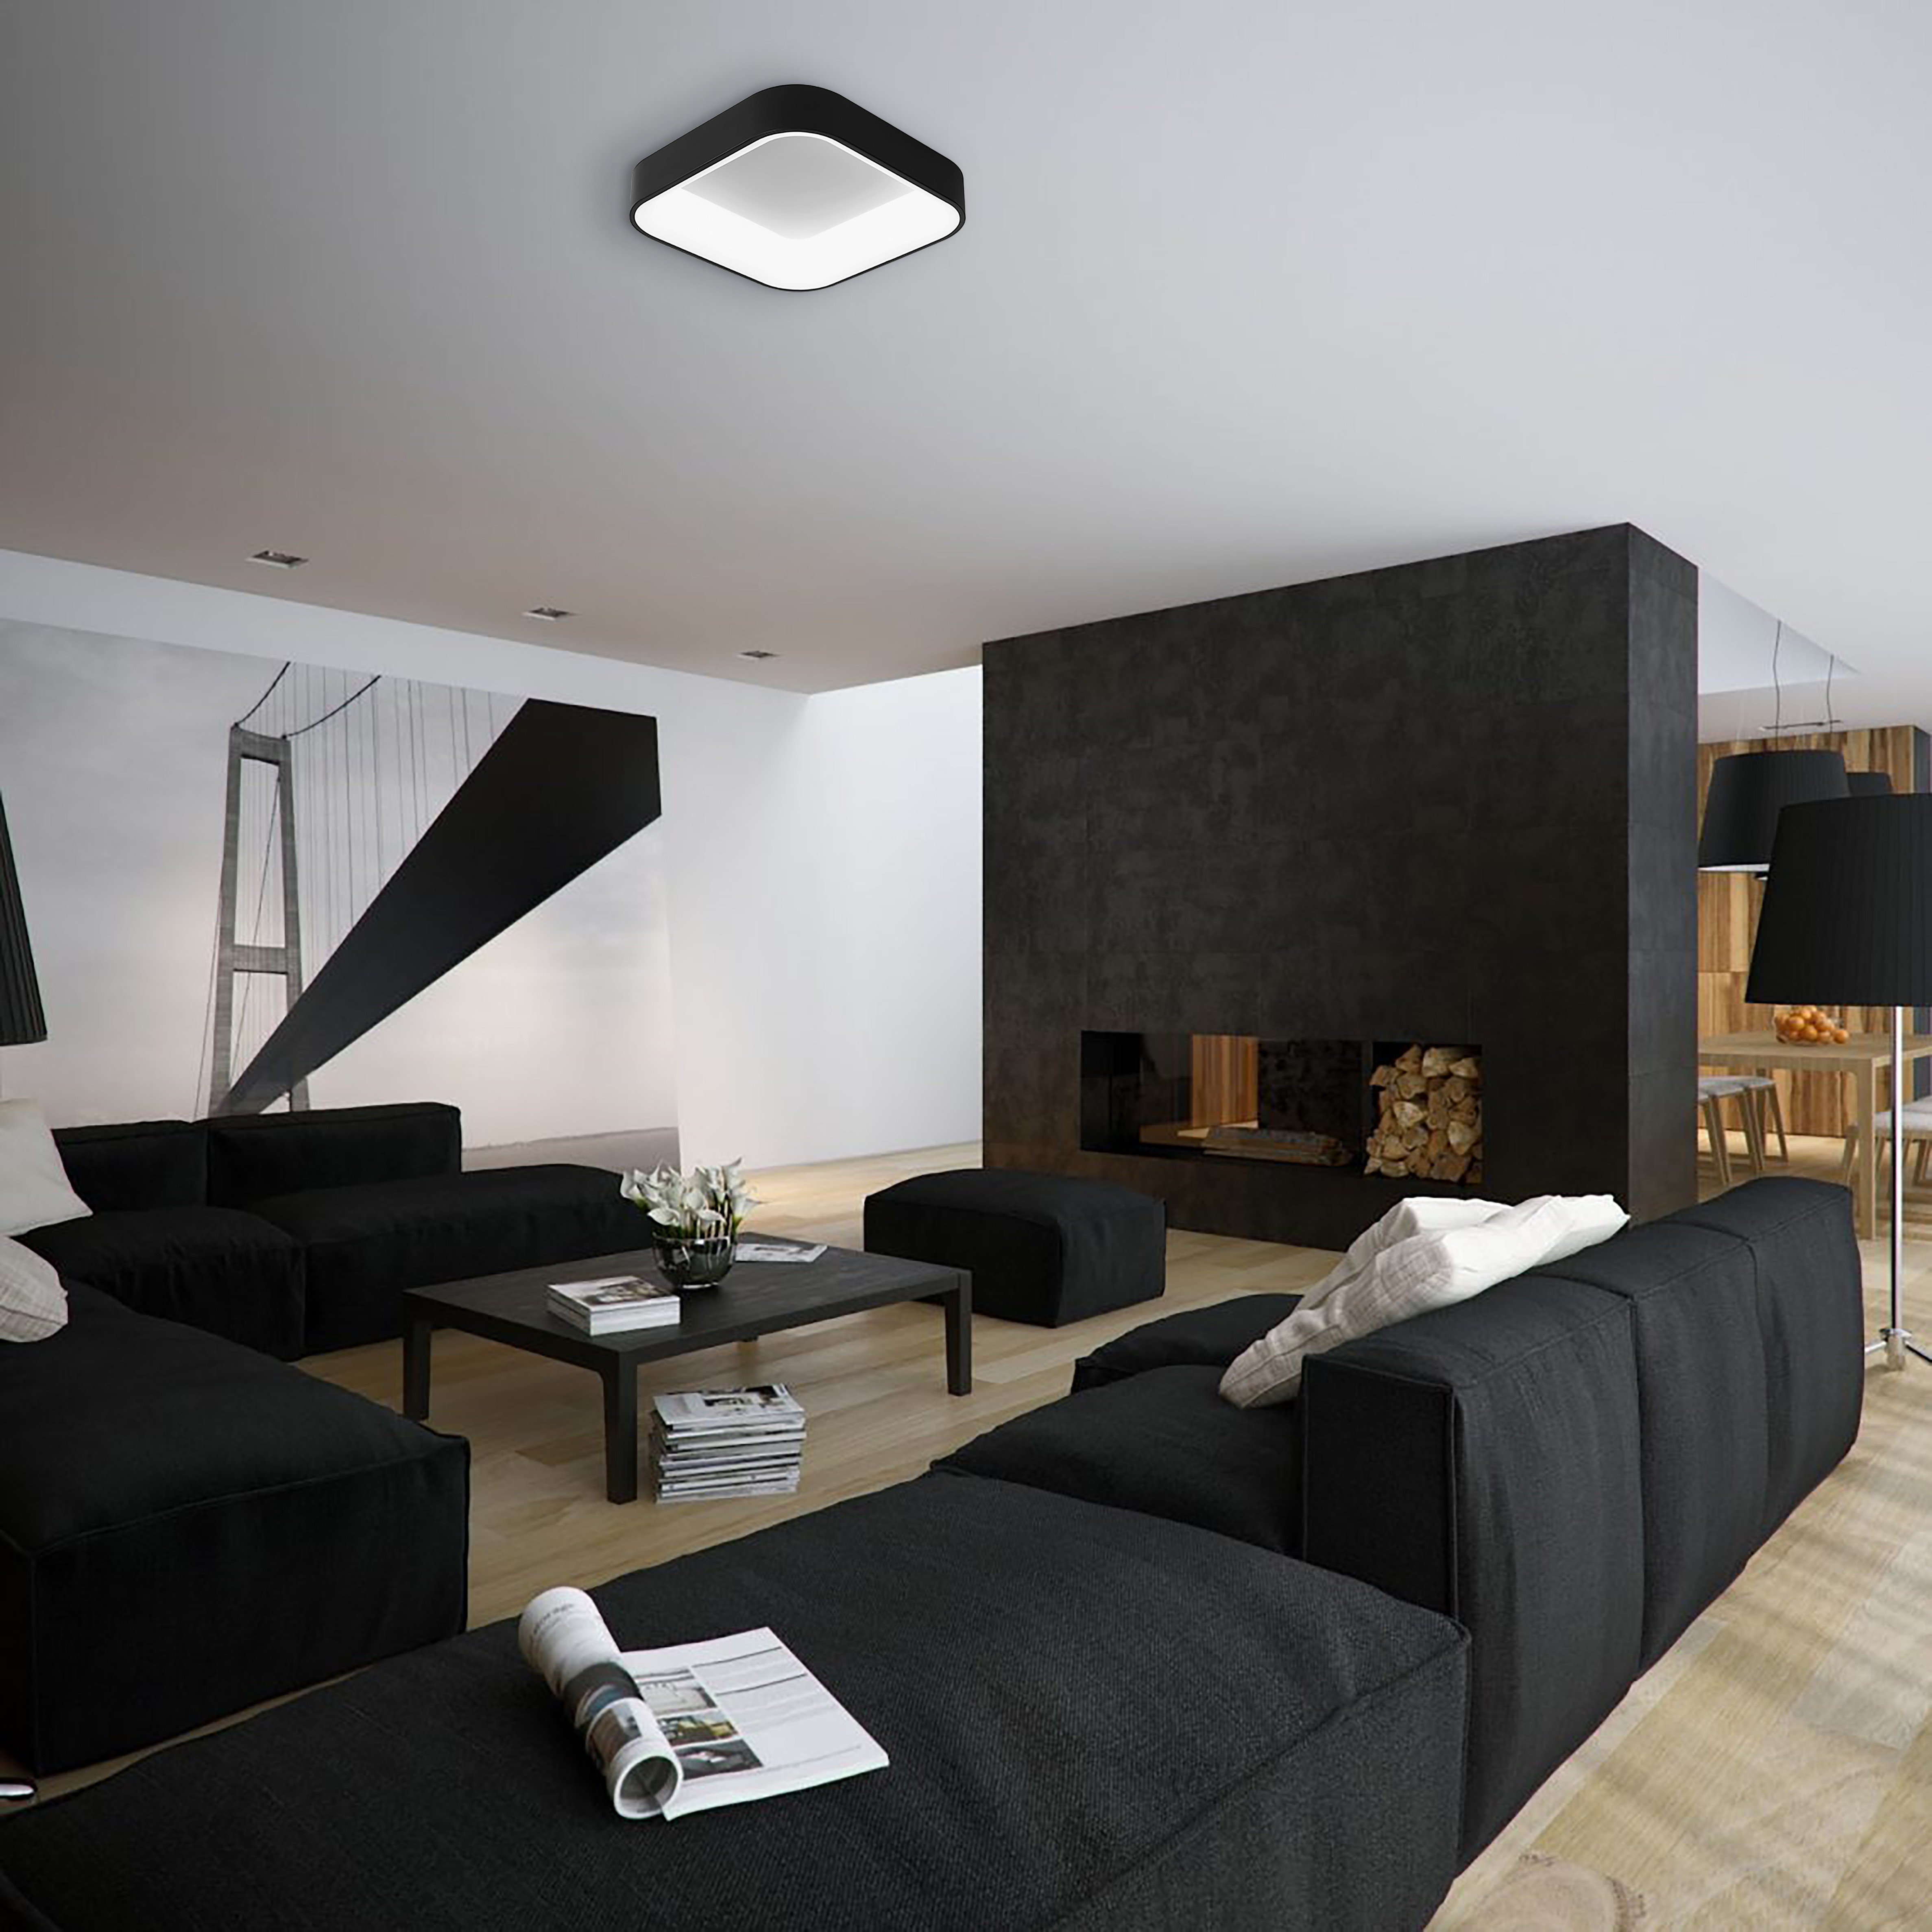 LED Φωτιστικό οροφής πλαφονιέρα LAS PALMAS 50W Μαύρη με εναλλαγή χρωμάτων και dimmable  6006BL